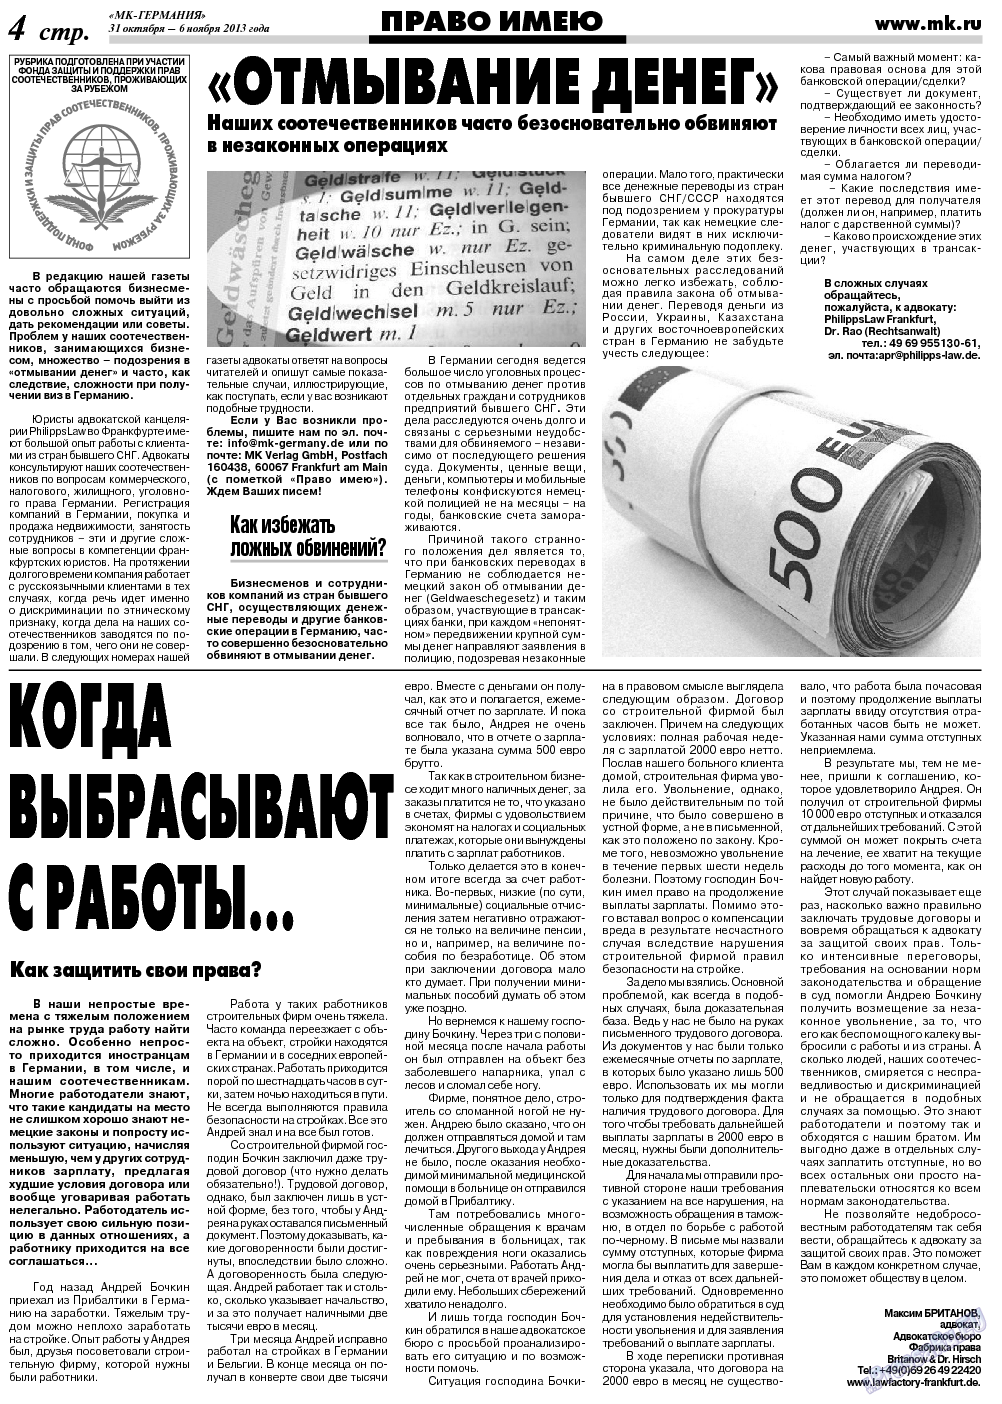 МК-Германия, газета. 2013 №44 стр.4